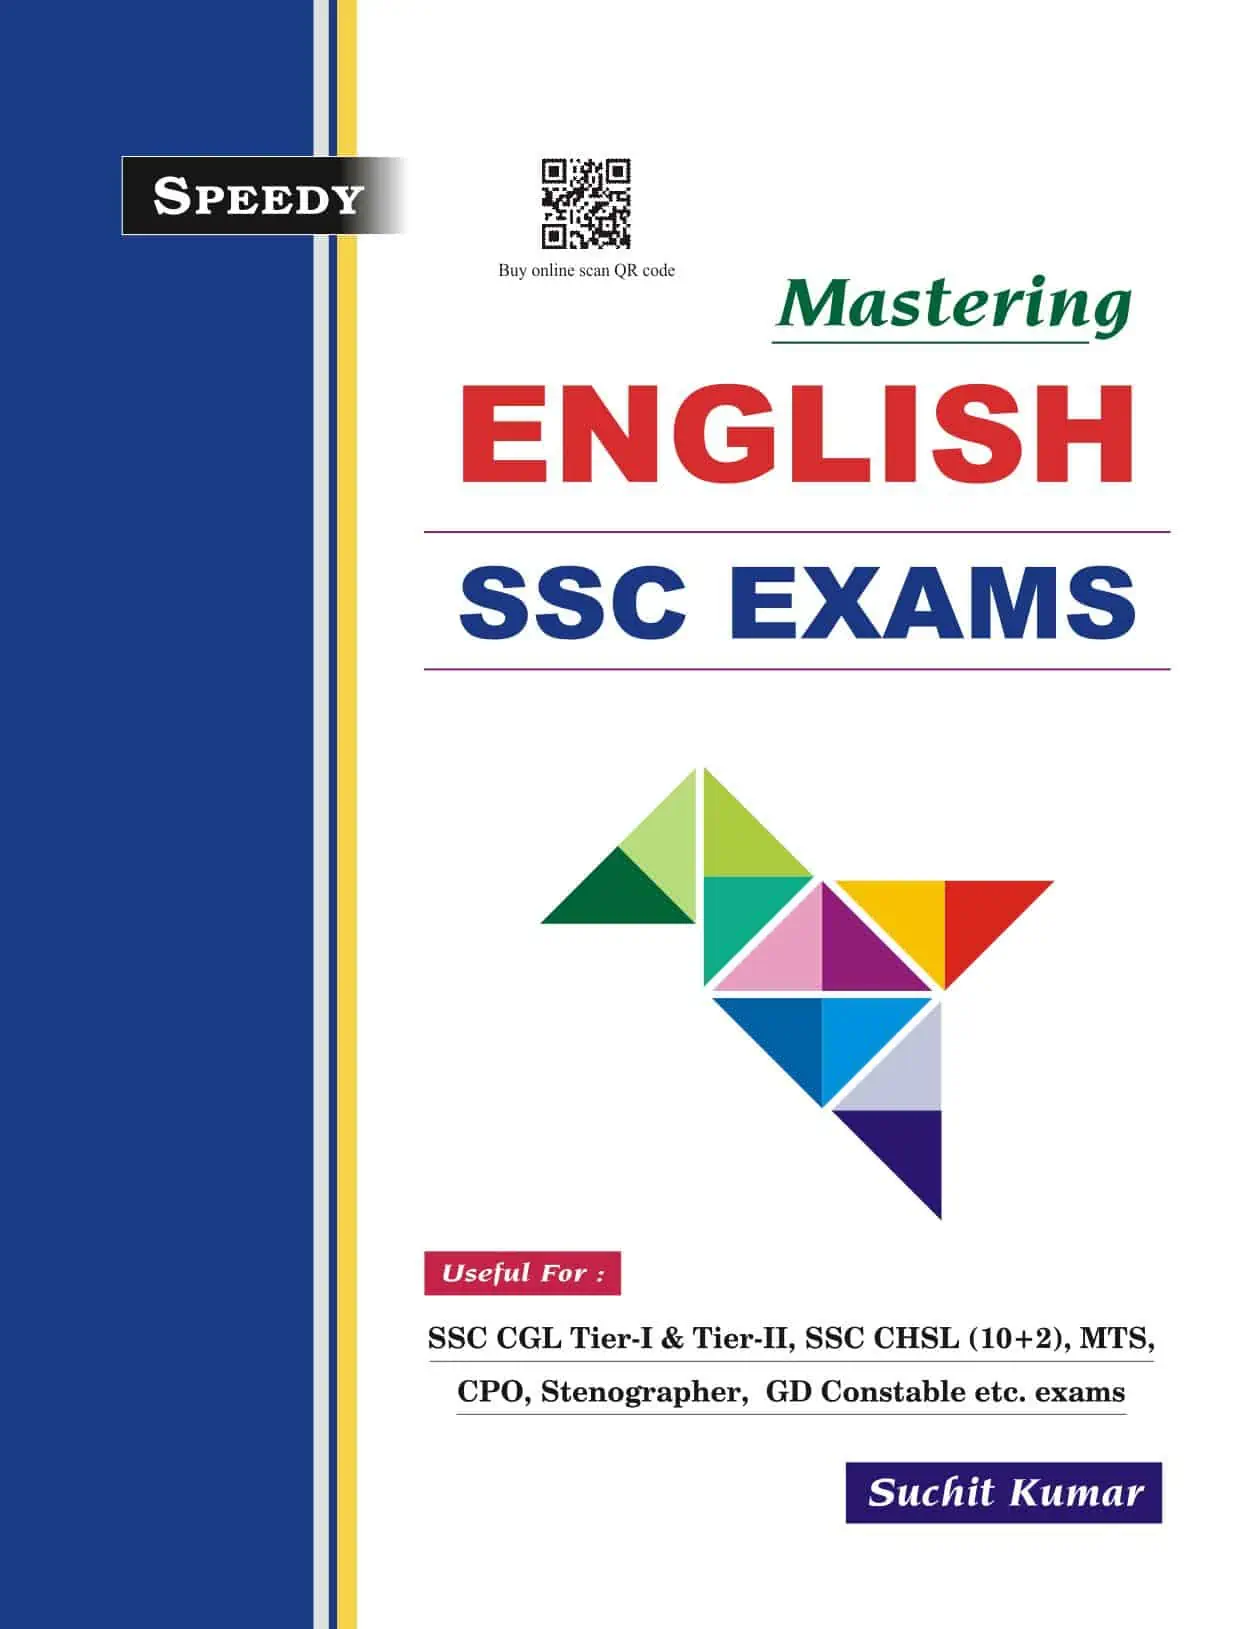 Speedy Mastering English by Suchit Kumar for SSC Exams PDF [2023 Edition]